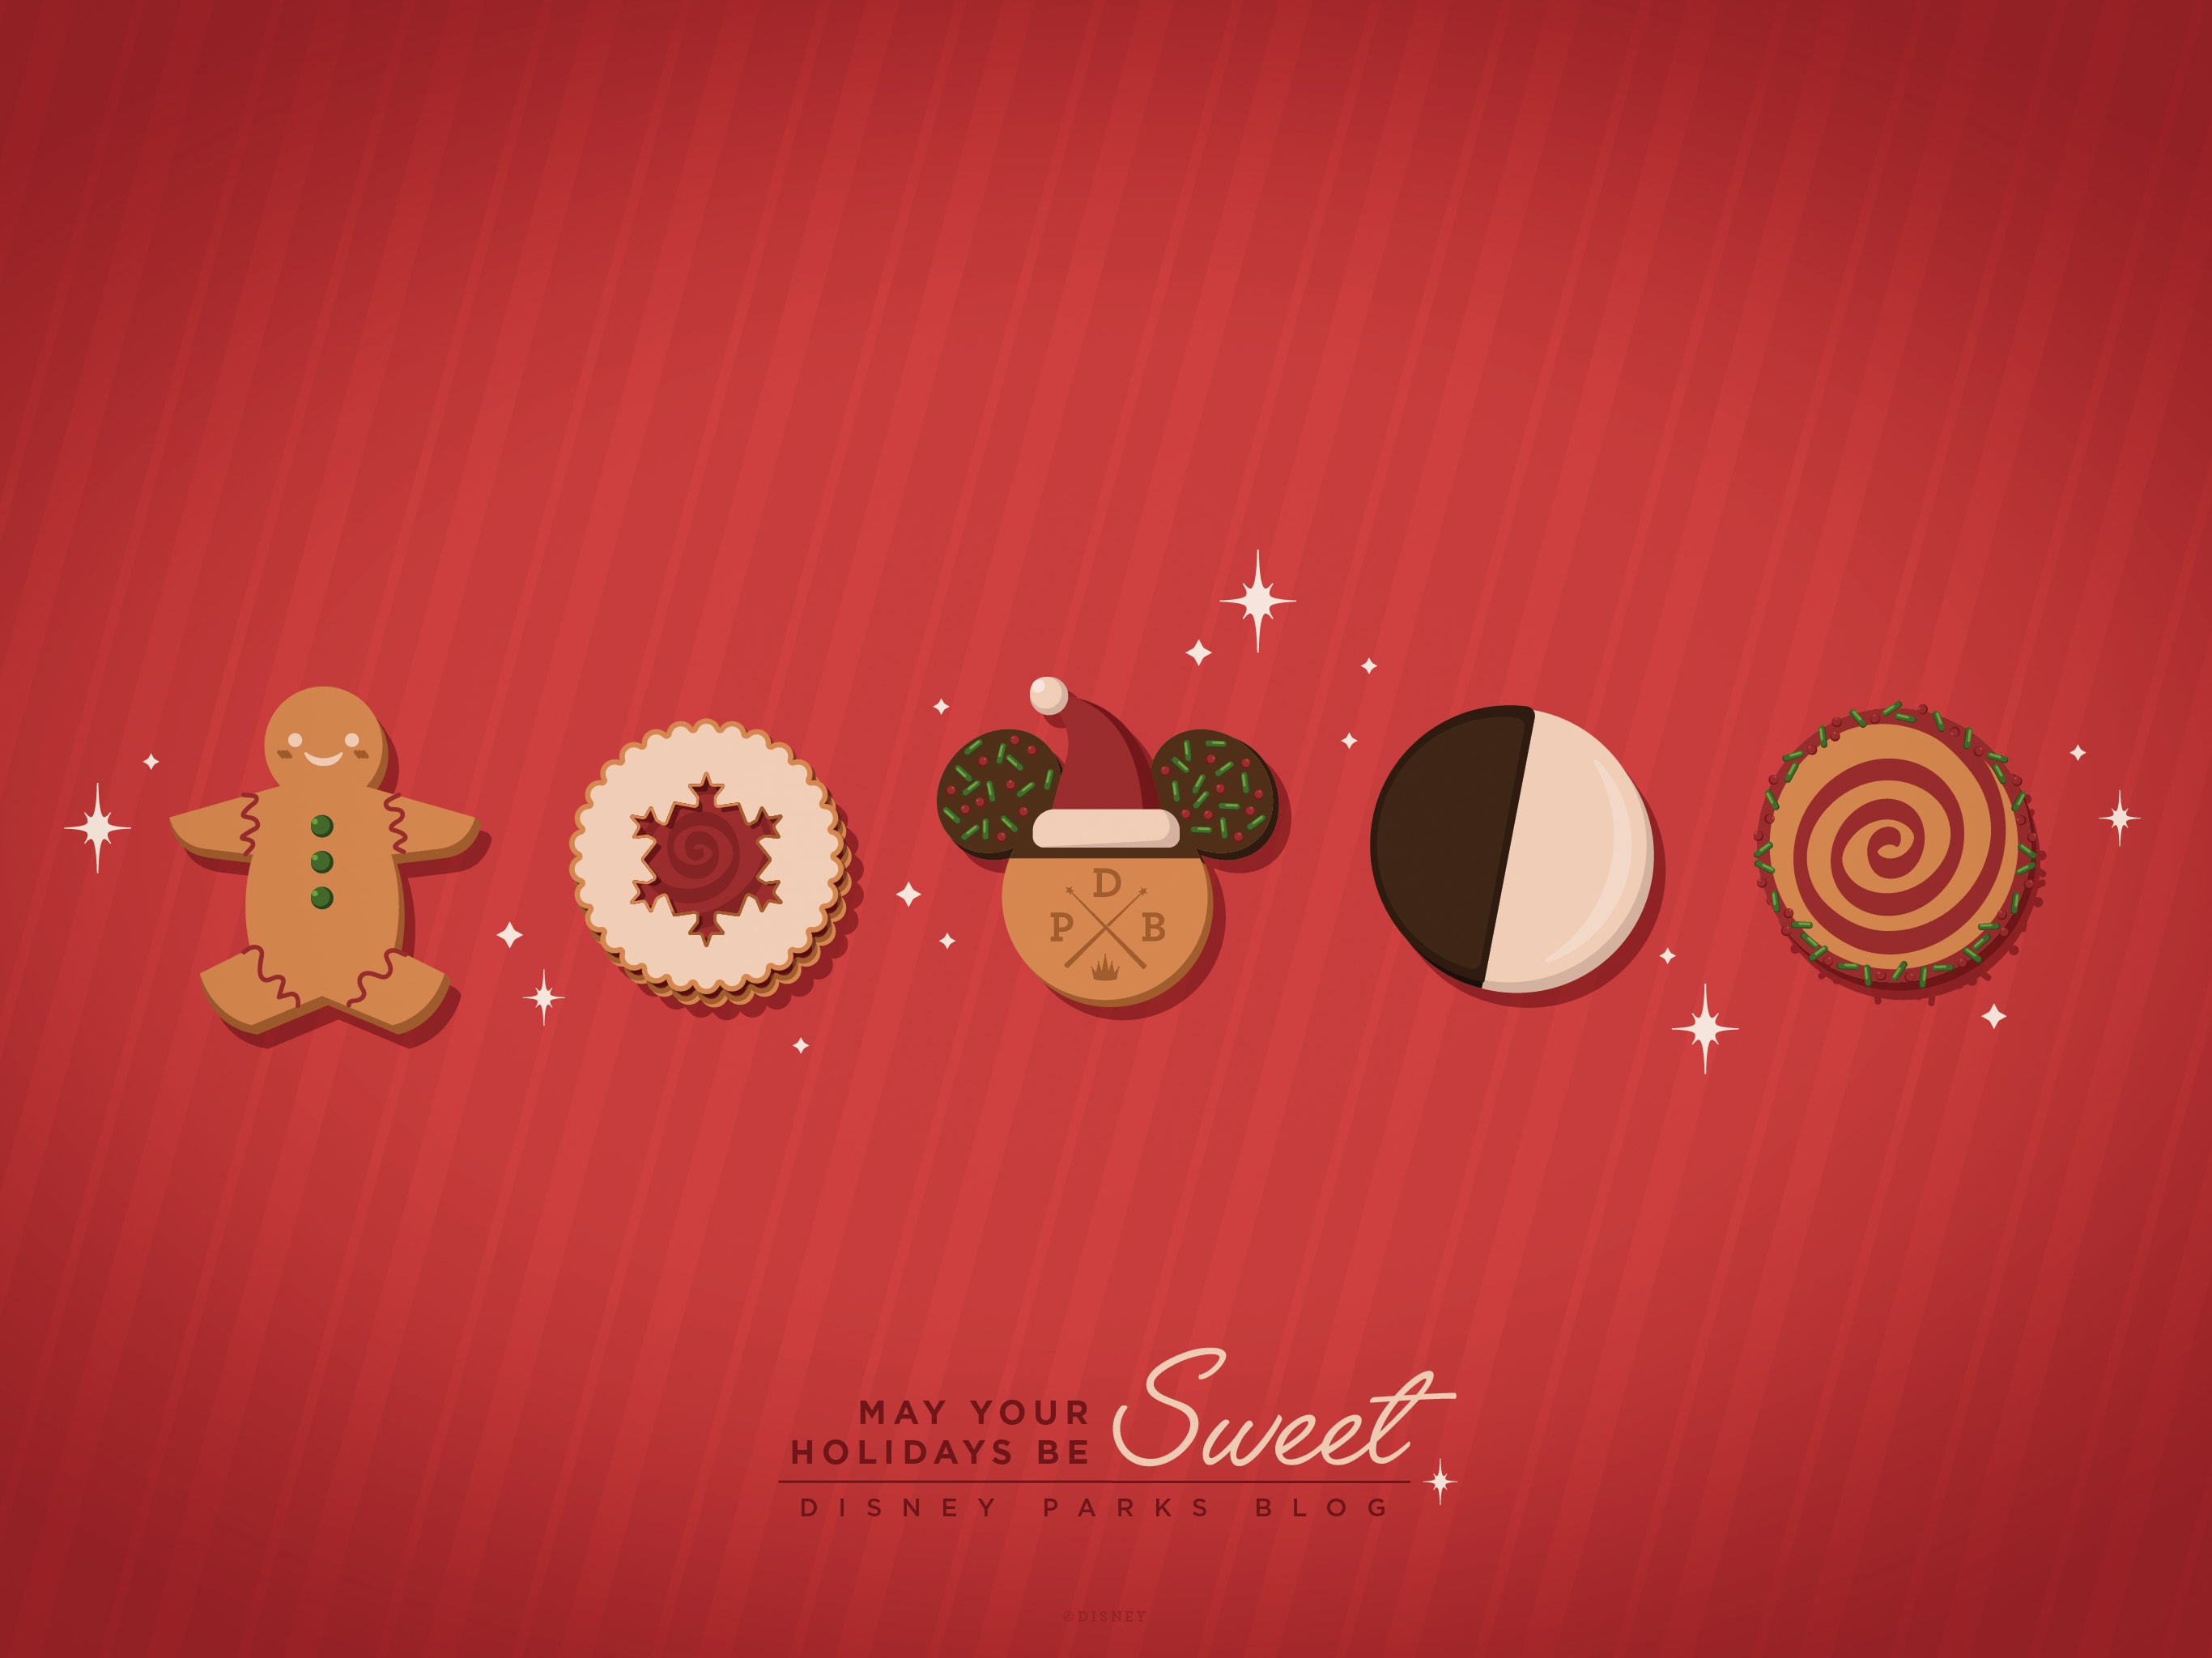 19 Christmas Cookie Wallpaper Desktop Ipad Disney Parks Blog